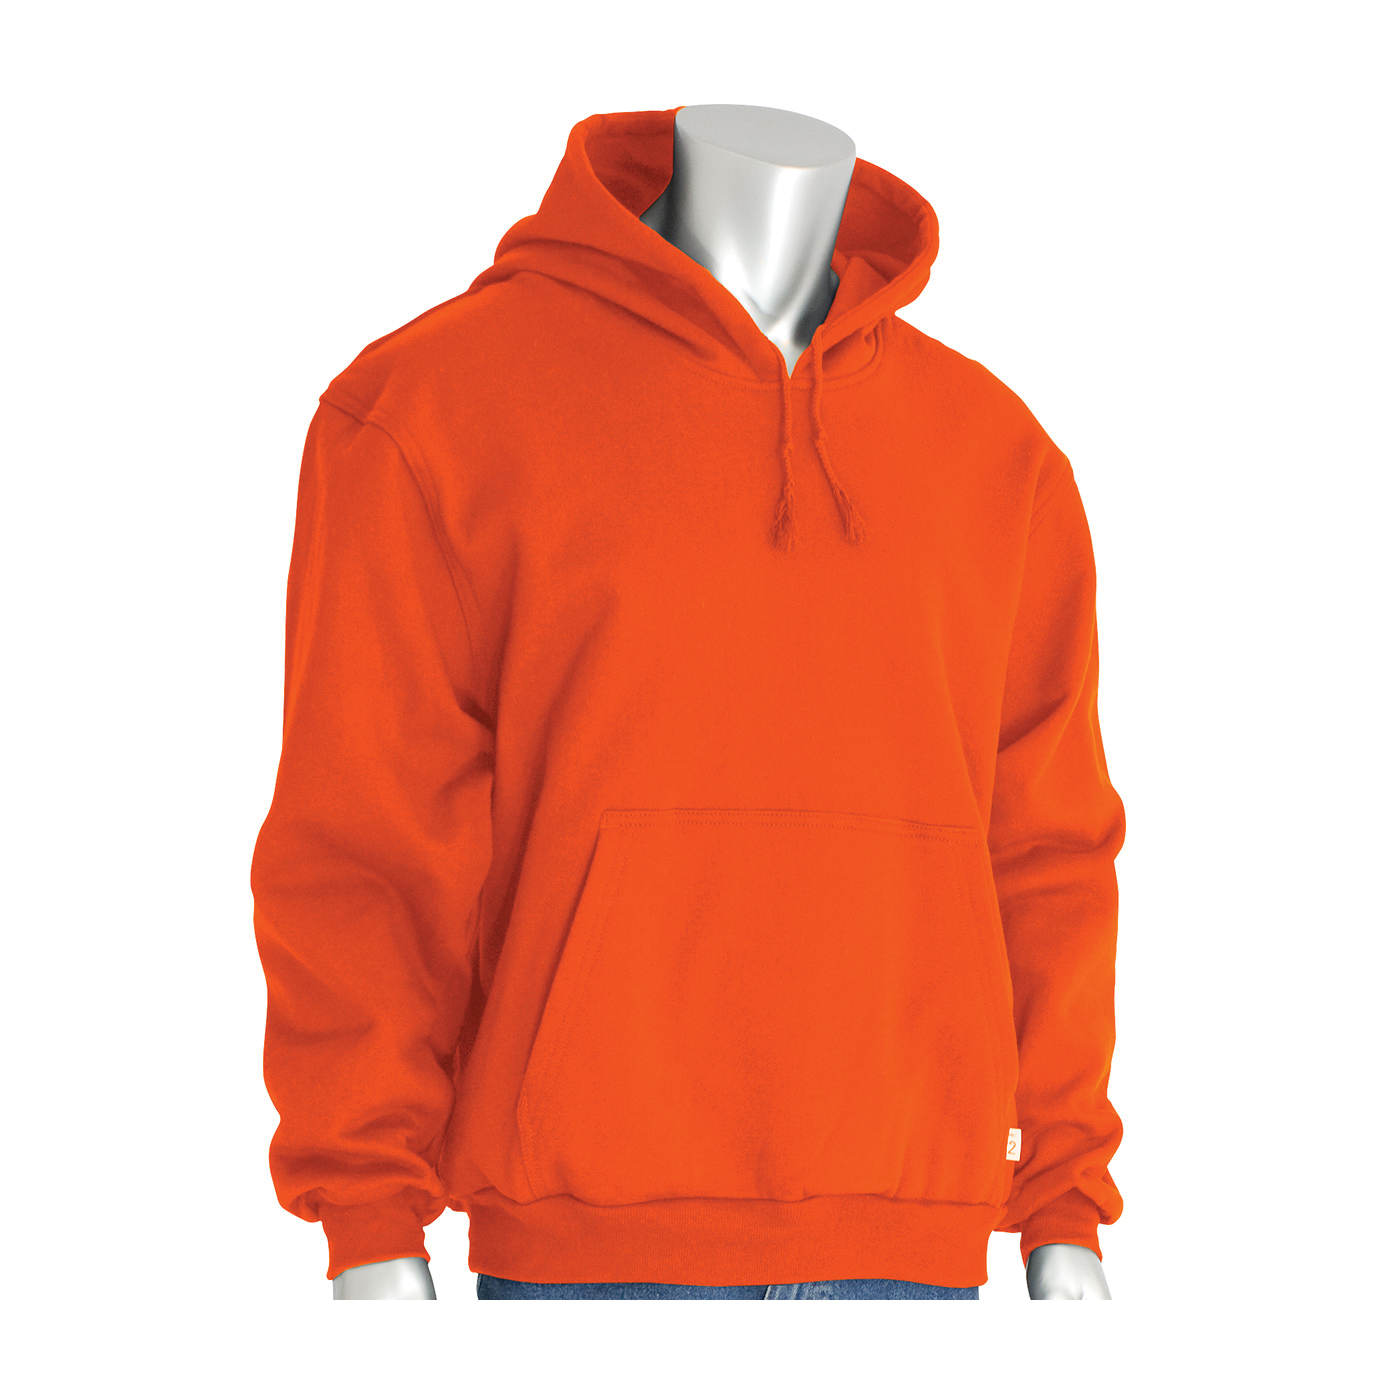 PIP® 385-FRPH-OR/3X Polartec® 385-FRPH Arc and Flame Resistant Sweatshirt, 3XL, Orange, FR Fleece Knit/100% Cotton, 34 in Regular, 35 in Tall L